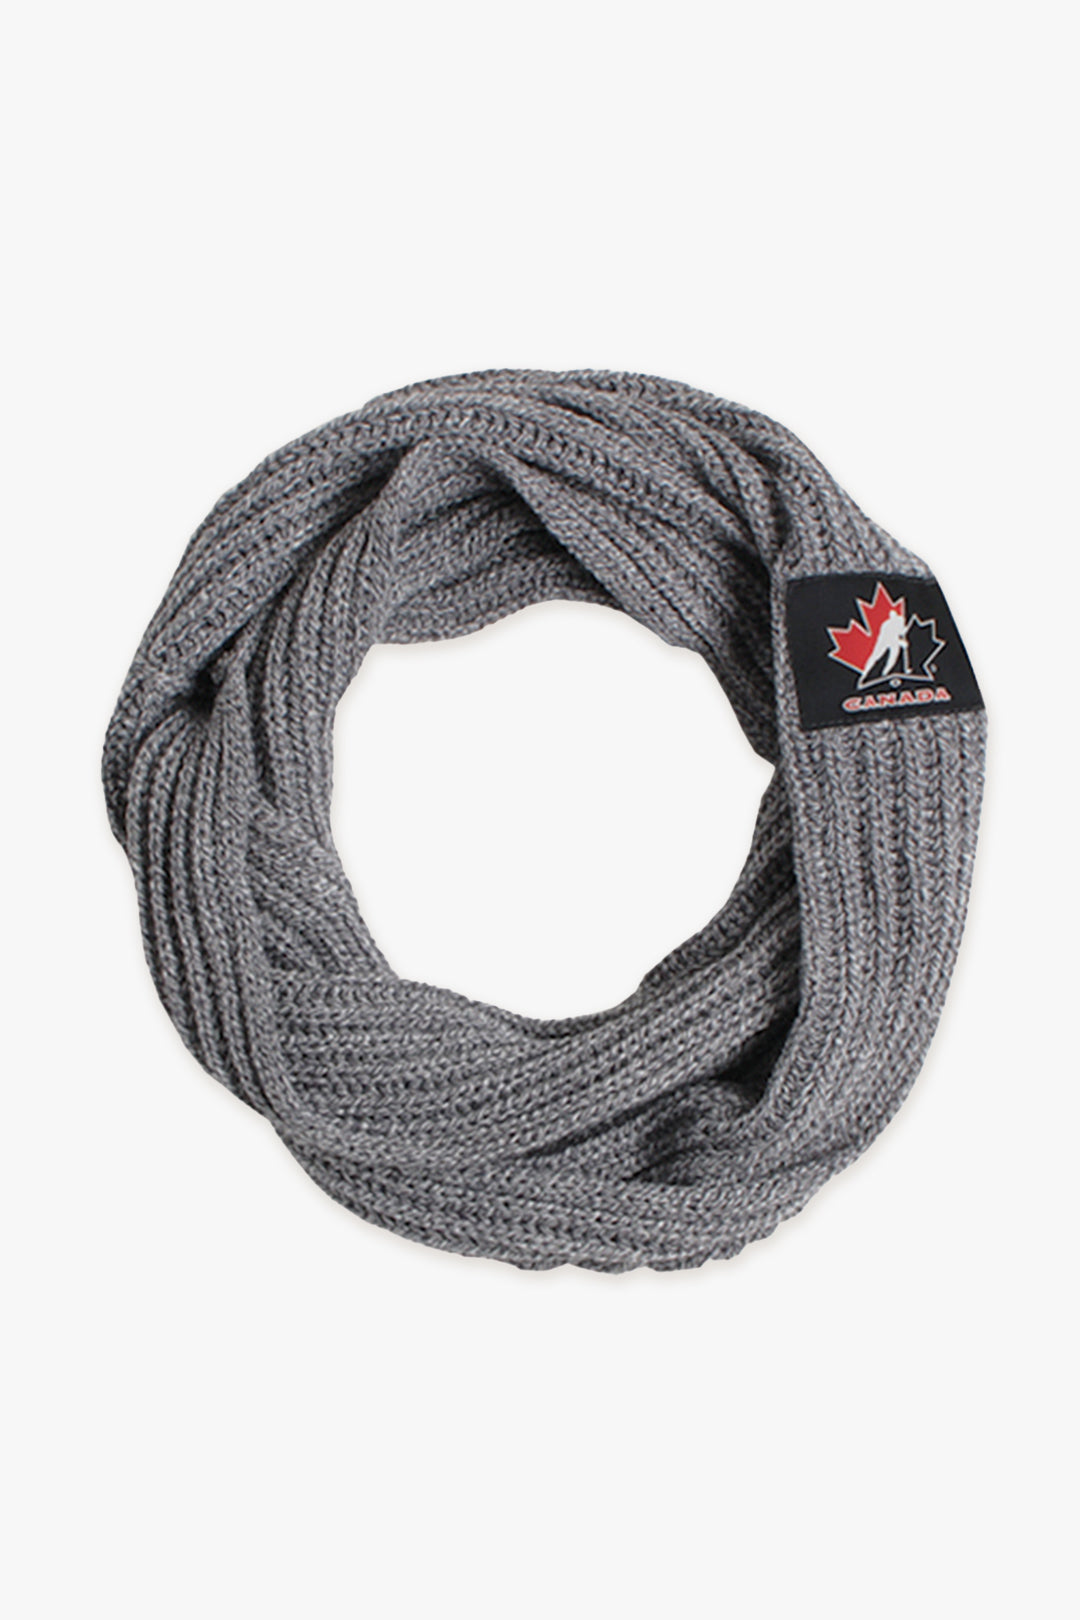 Hockey Canada Ladies Knit Infinity Scarf